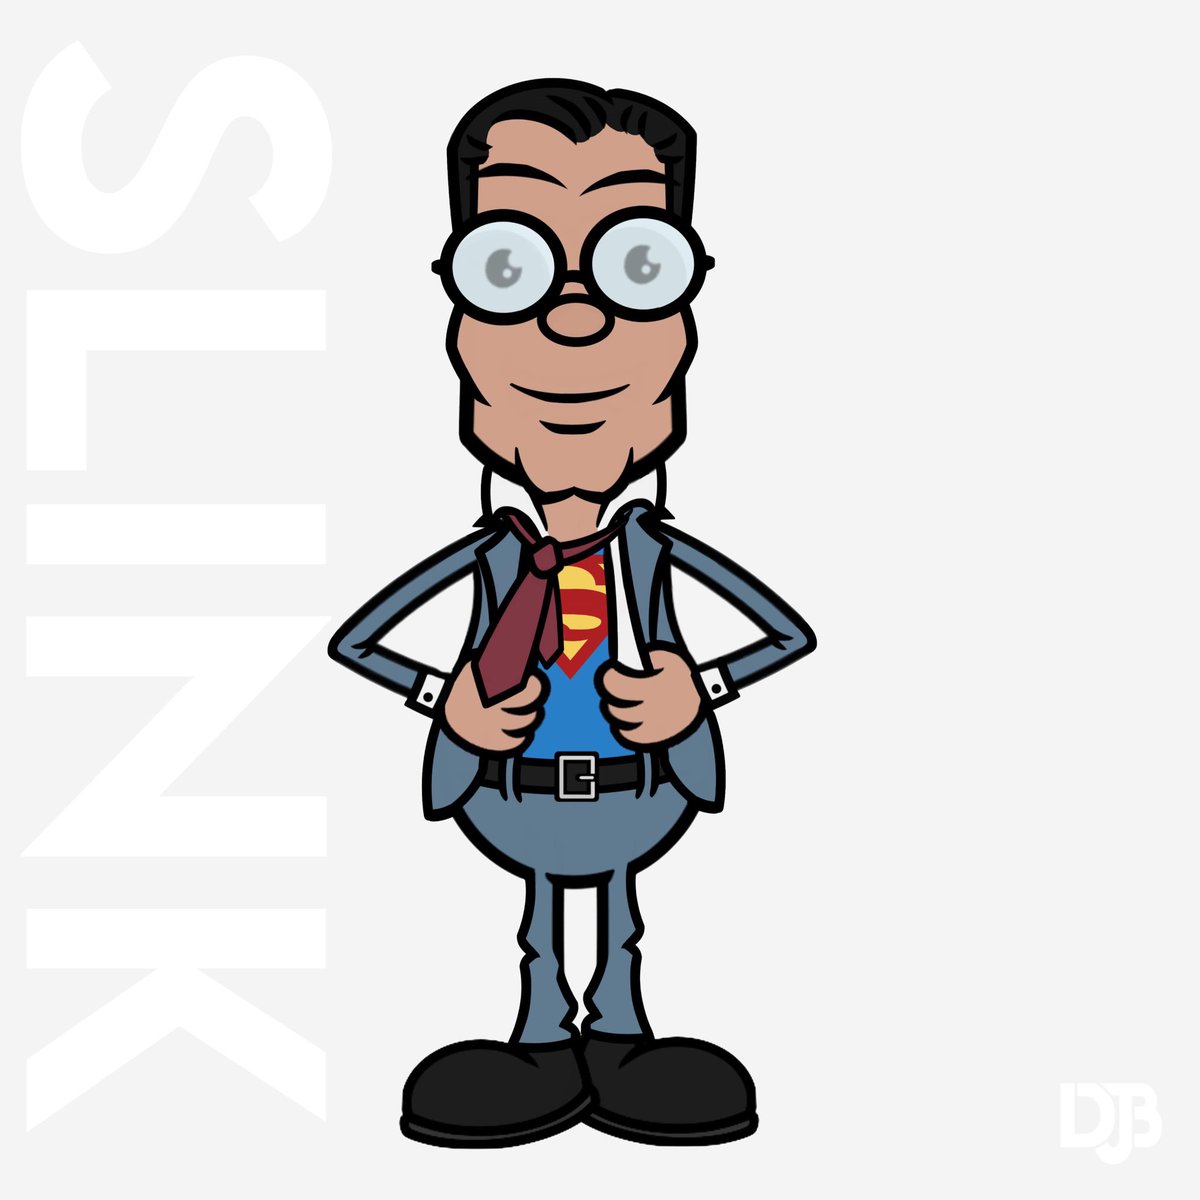 Superman got SLINKd #superman #supermanthemovie #clarkkent #christopherreeve #richarddonner #manofsteel #dccomics #superheroes #slink #slinkd #djbu #artistofinstagram #artwork #artist #characterdesign